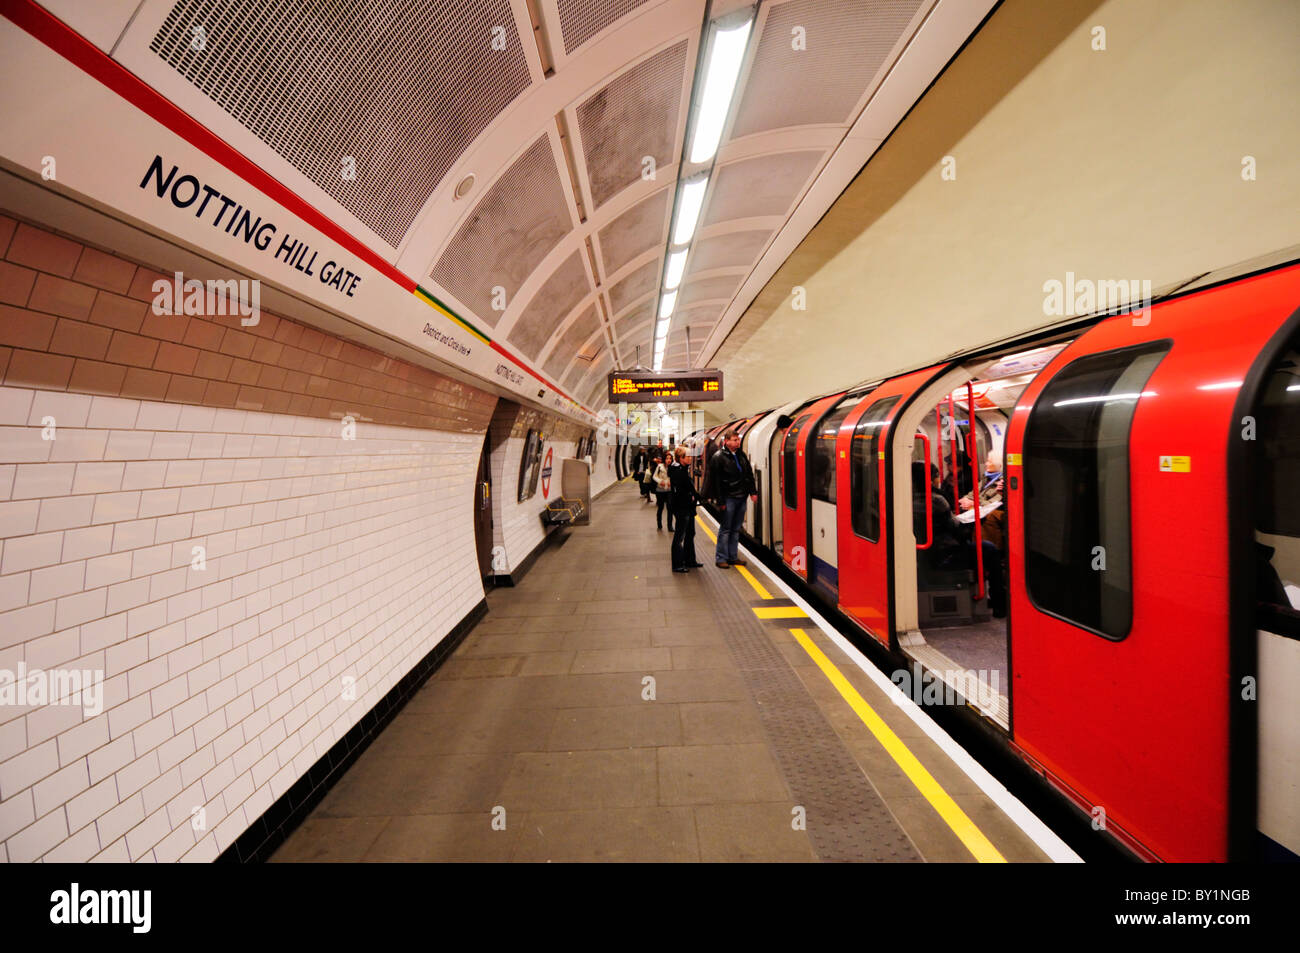 Notting Hill Gate Station de métro Central Line plate-forme, London, England, UK Banque D'Images